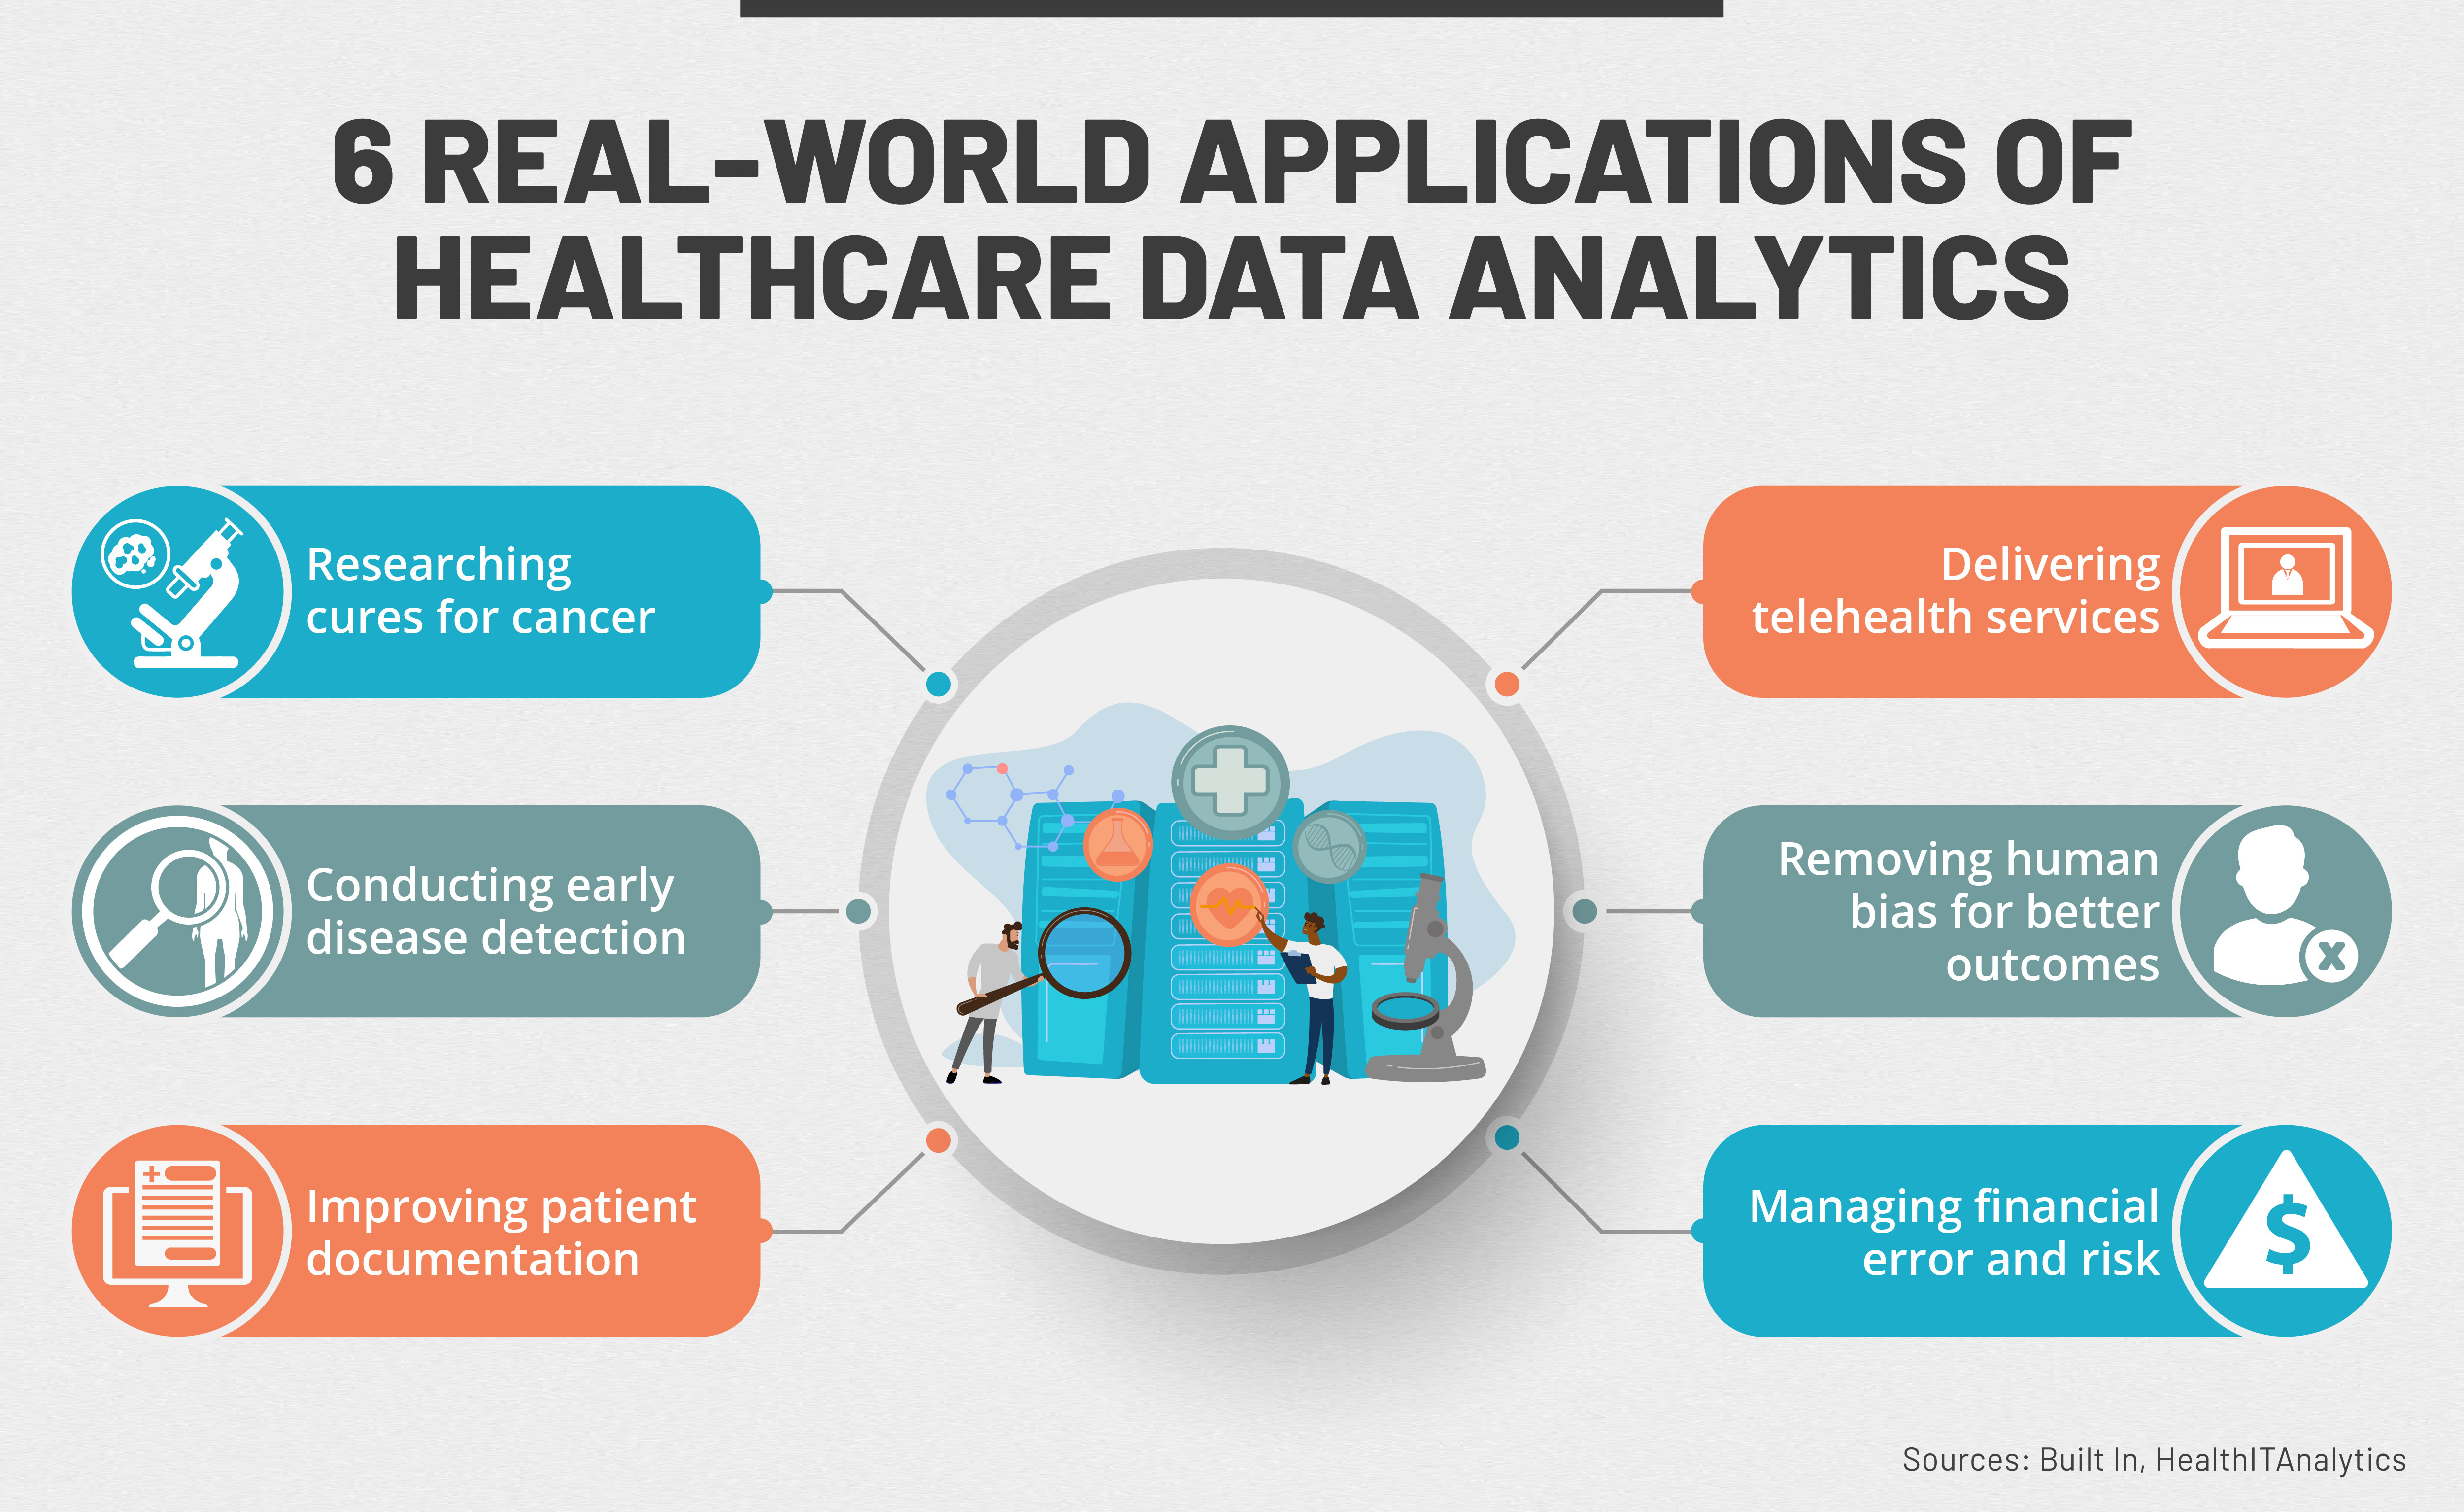 Six ways that healthcare organizations use data analytics